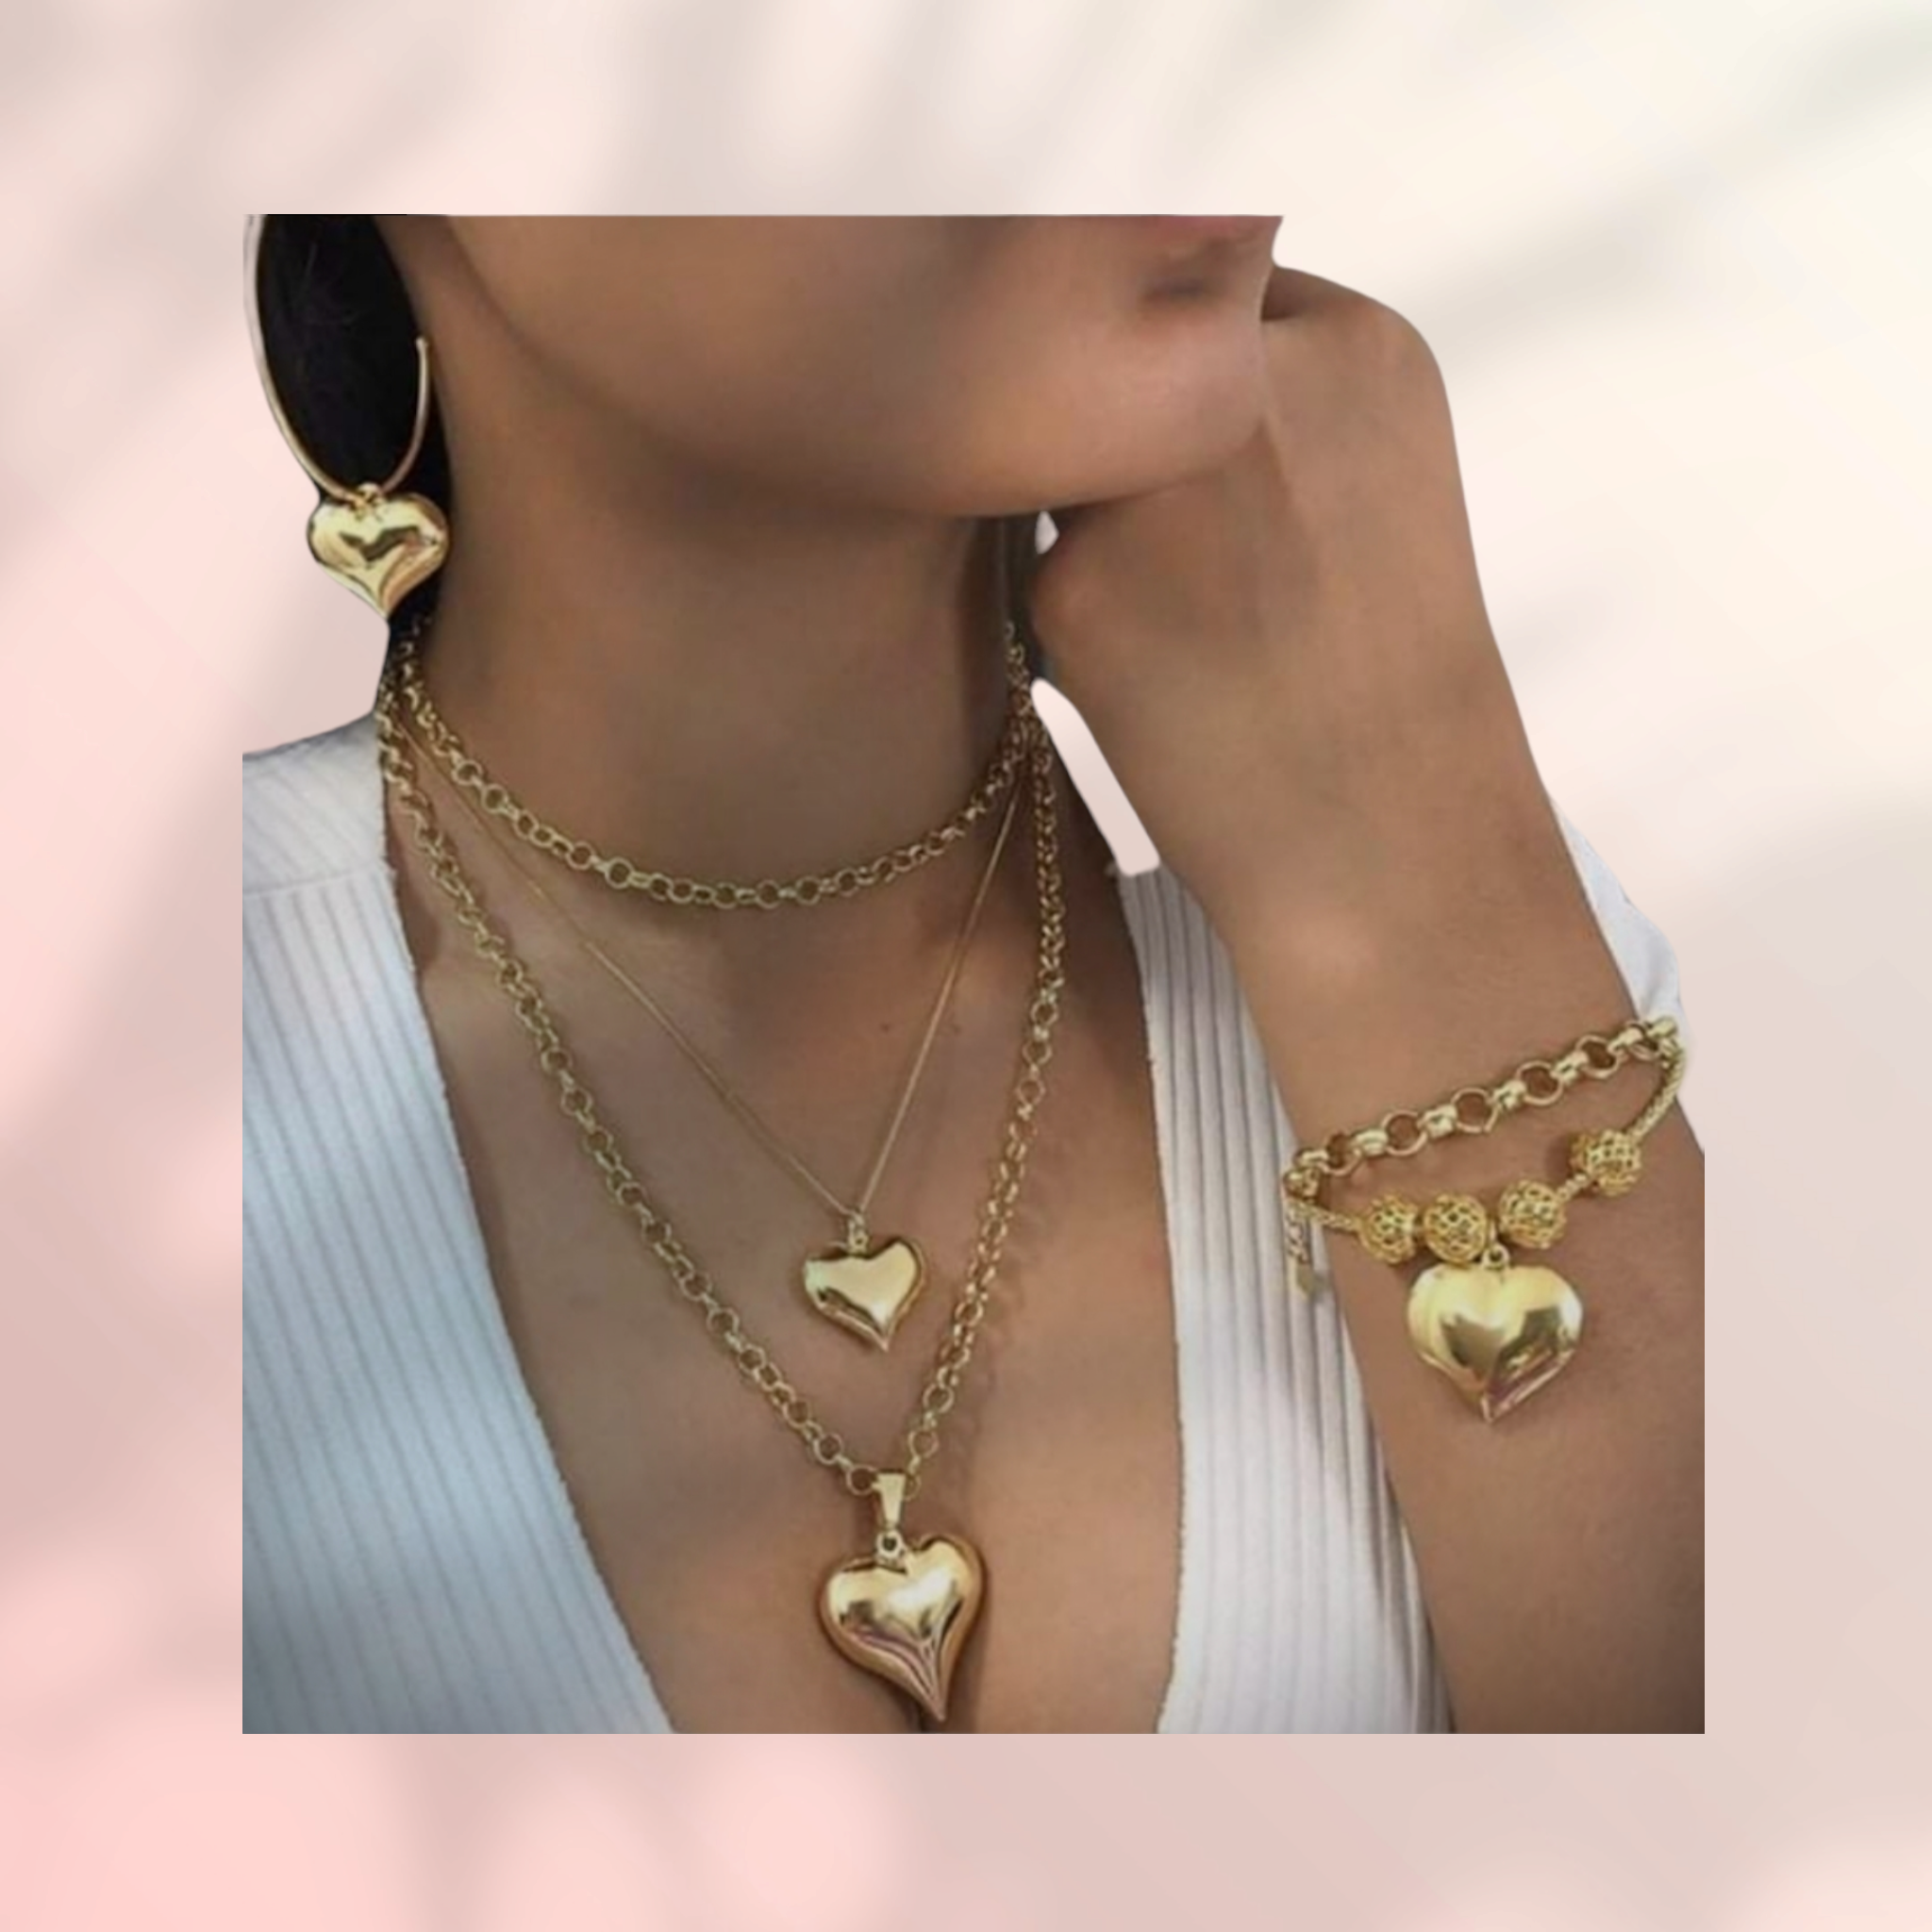 3 Piece Heart Necklace & Bracelet Set